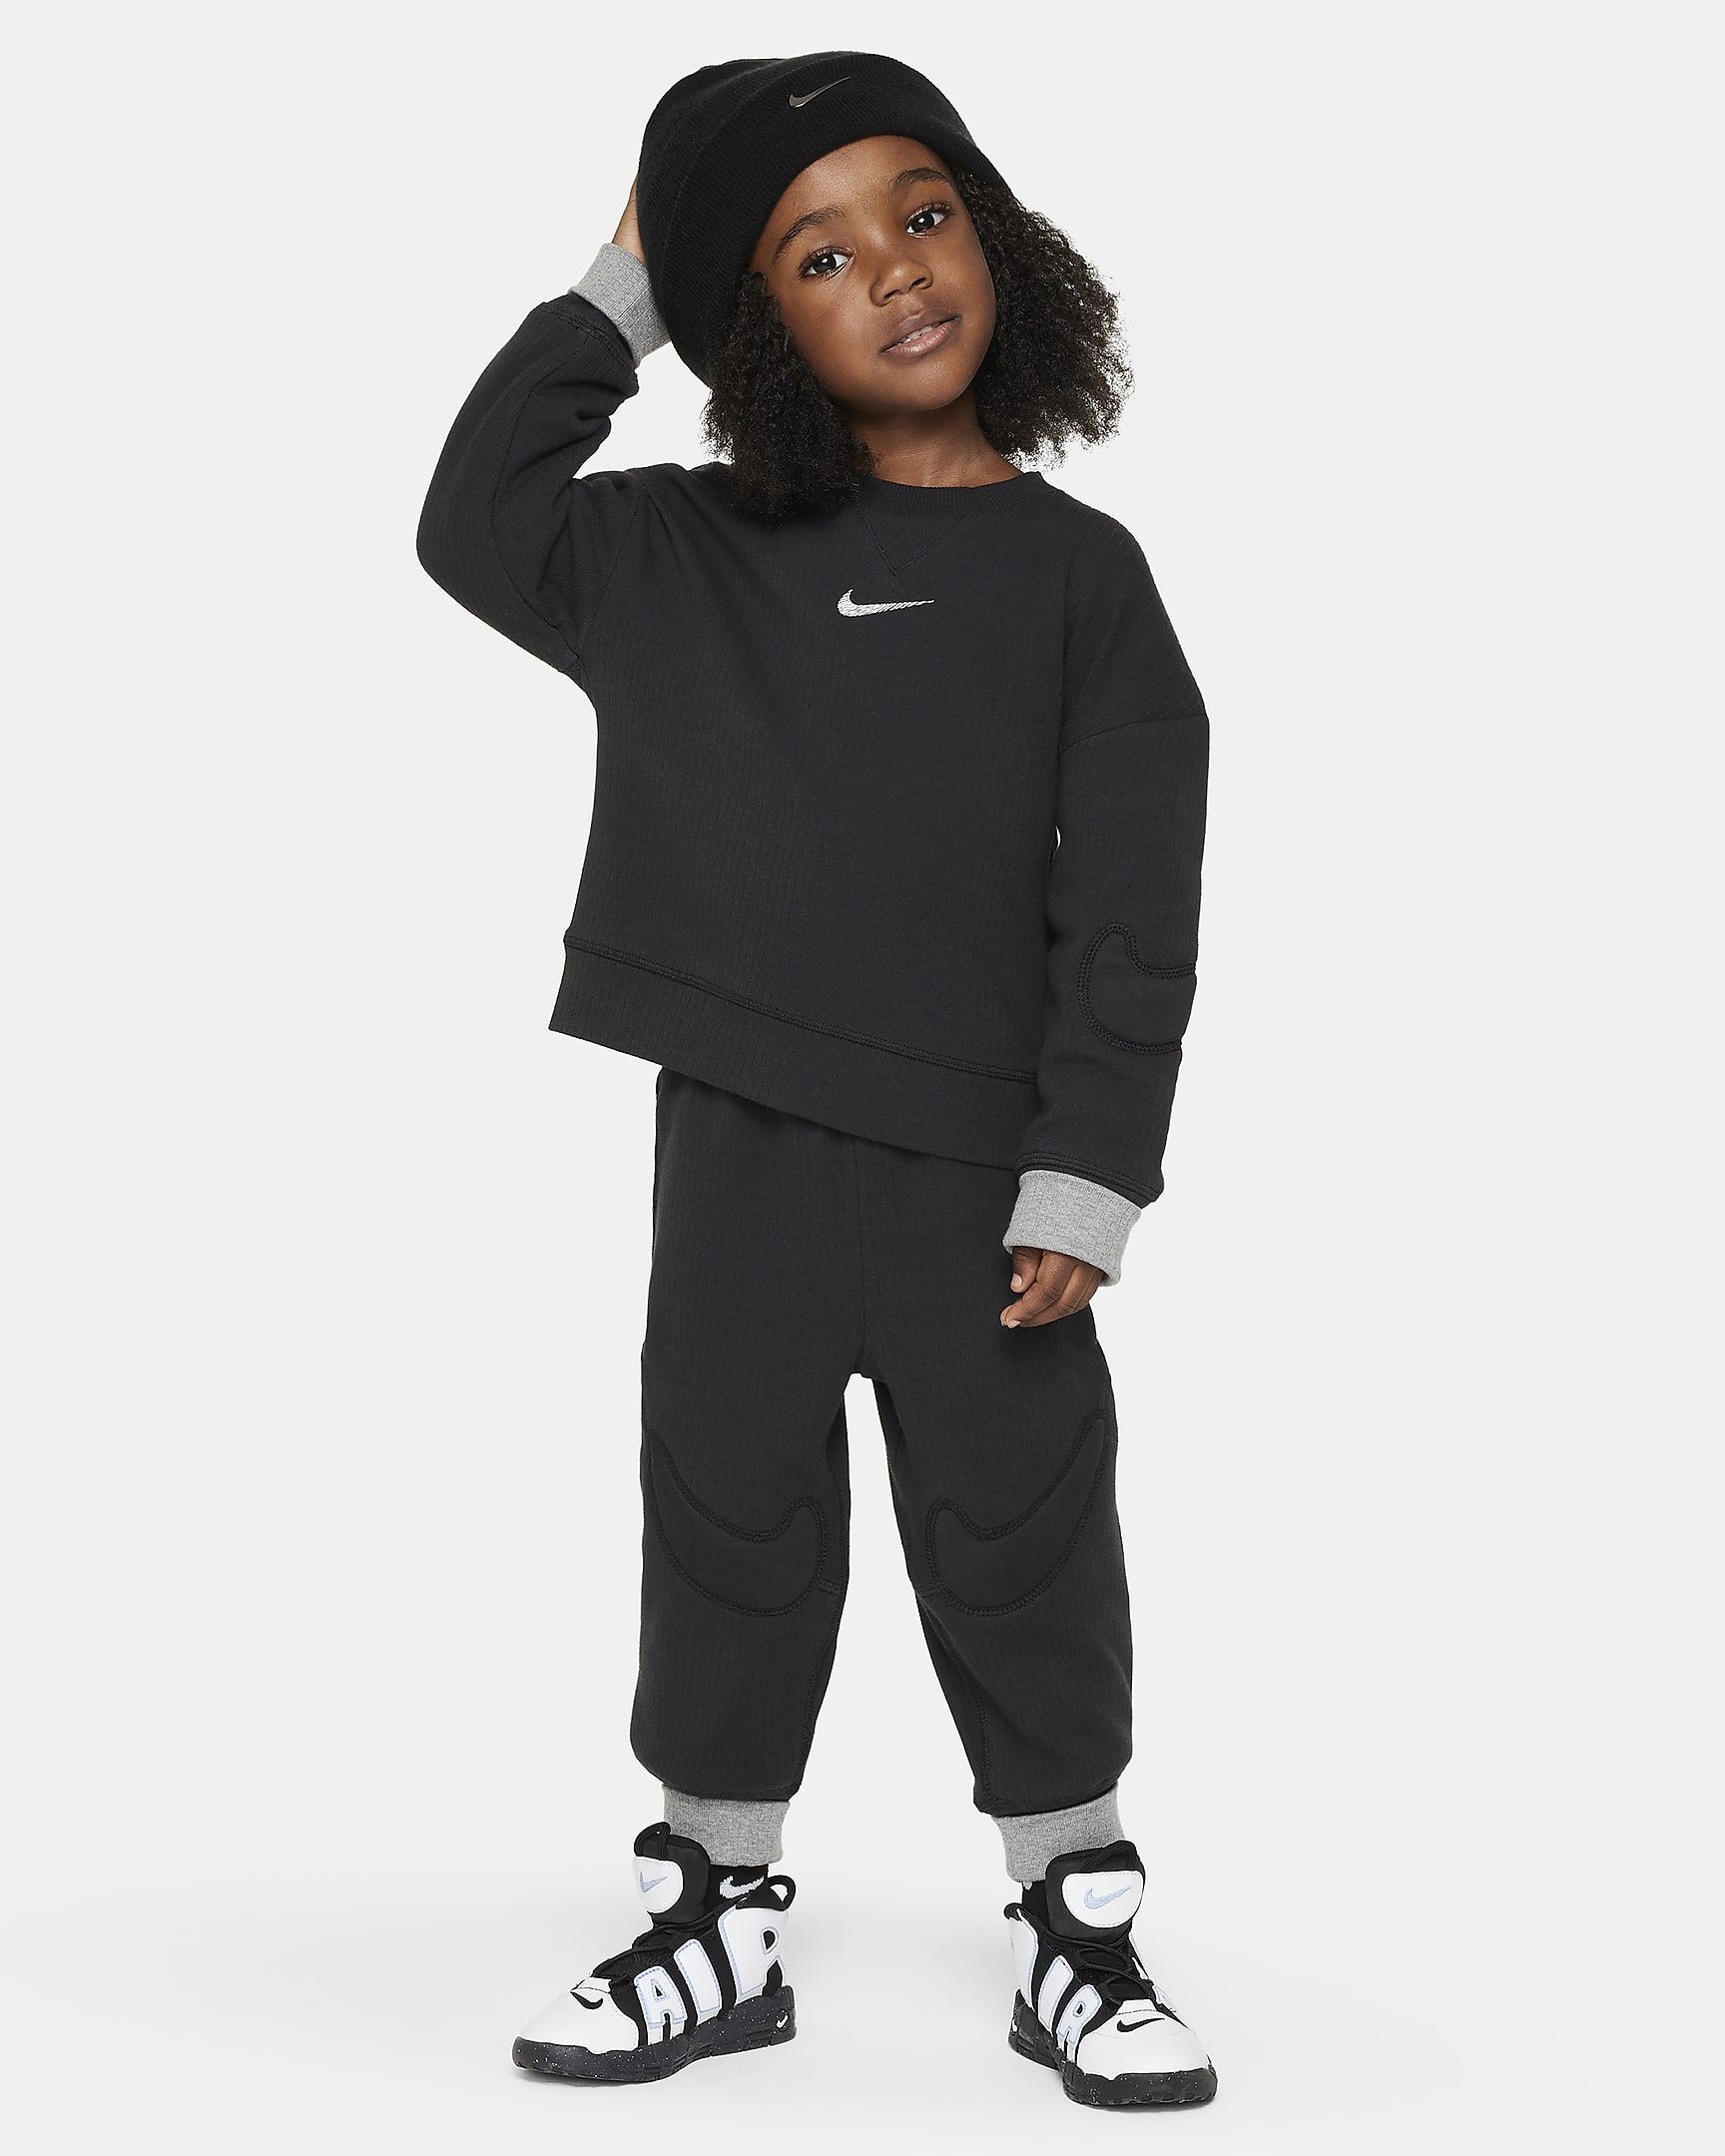 Nike ReadySet Toddler 2-Piece Crew Set. Nike.com | Nike (US)